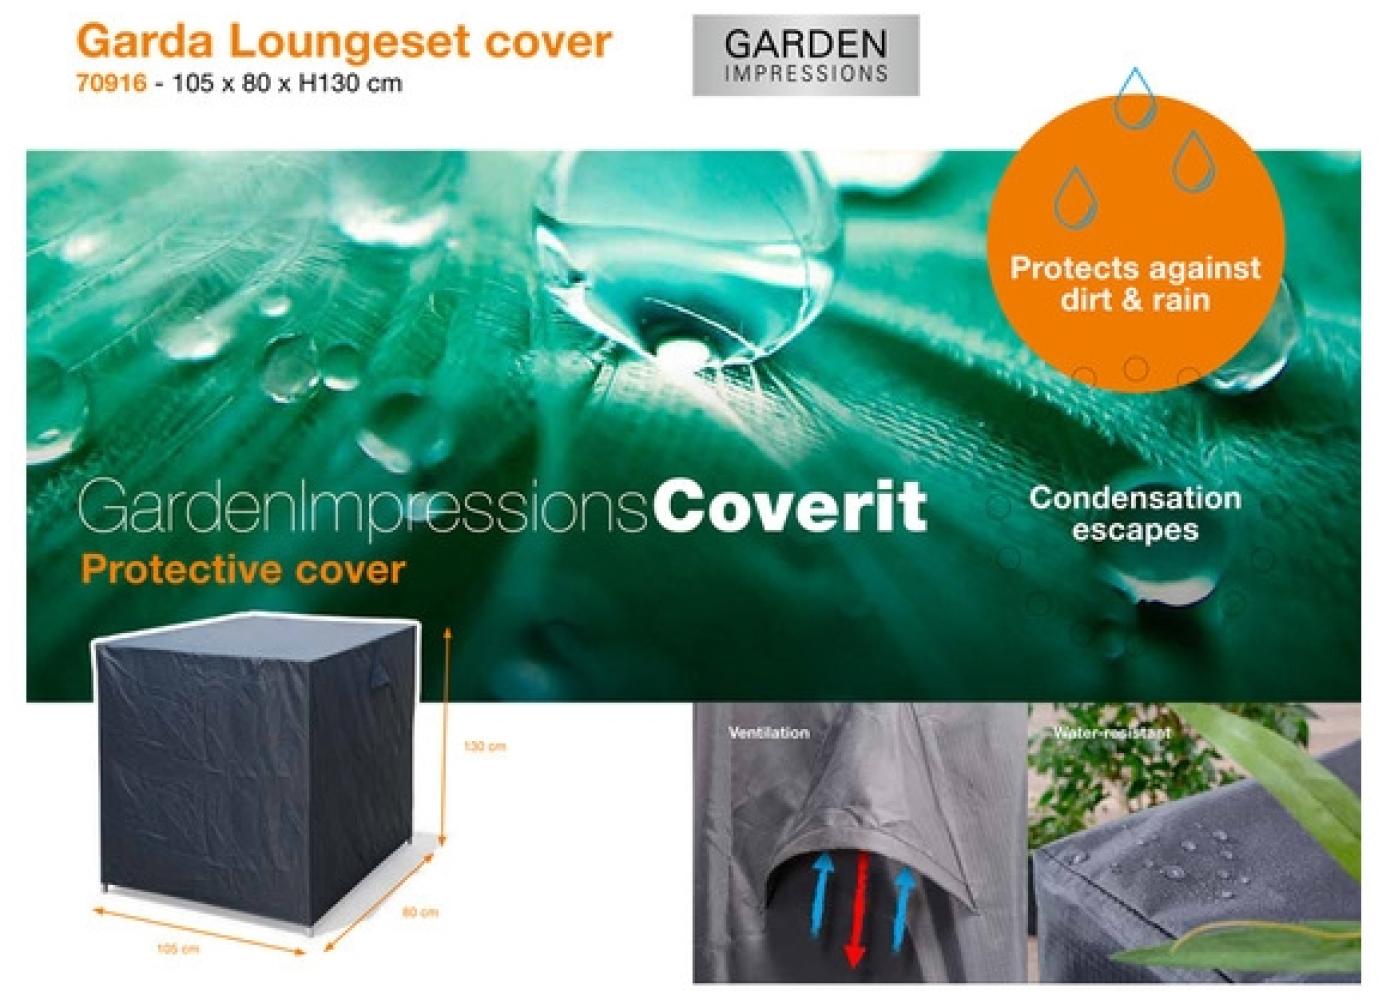 Garden Impressions Coverit Garda loungeset cover 105x80xH130 Bild 1